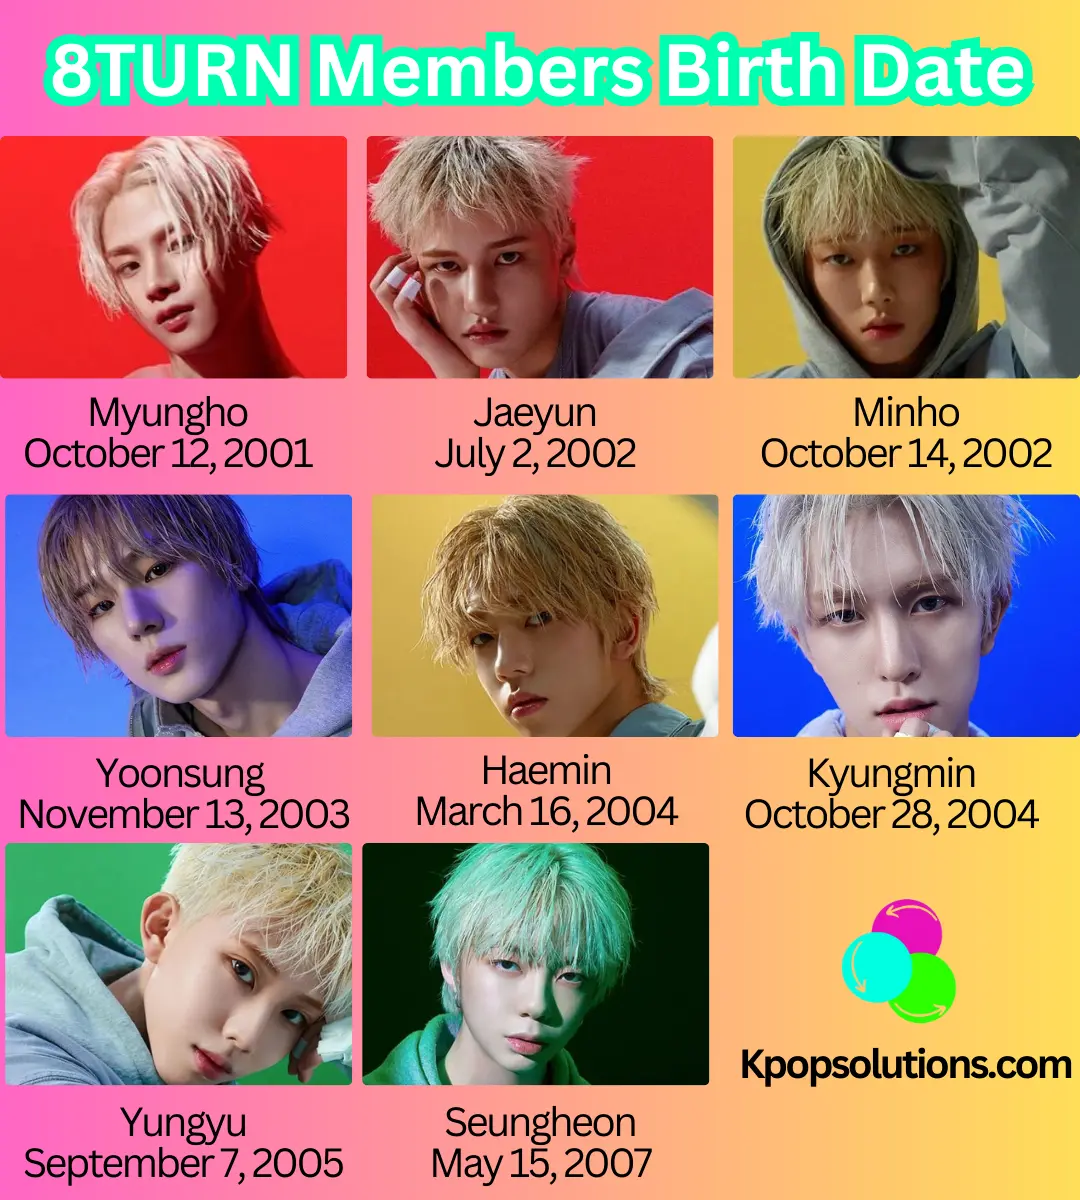 8TURN members dates of birth and current ages: Myungho, Jaeyun, Minho, Yoonsung, Haemin, Kyungmin, Yungyu, and Seungheon.